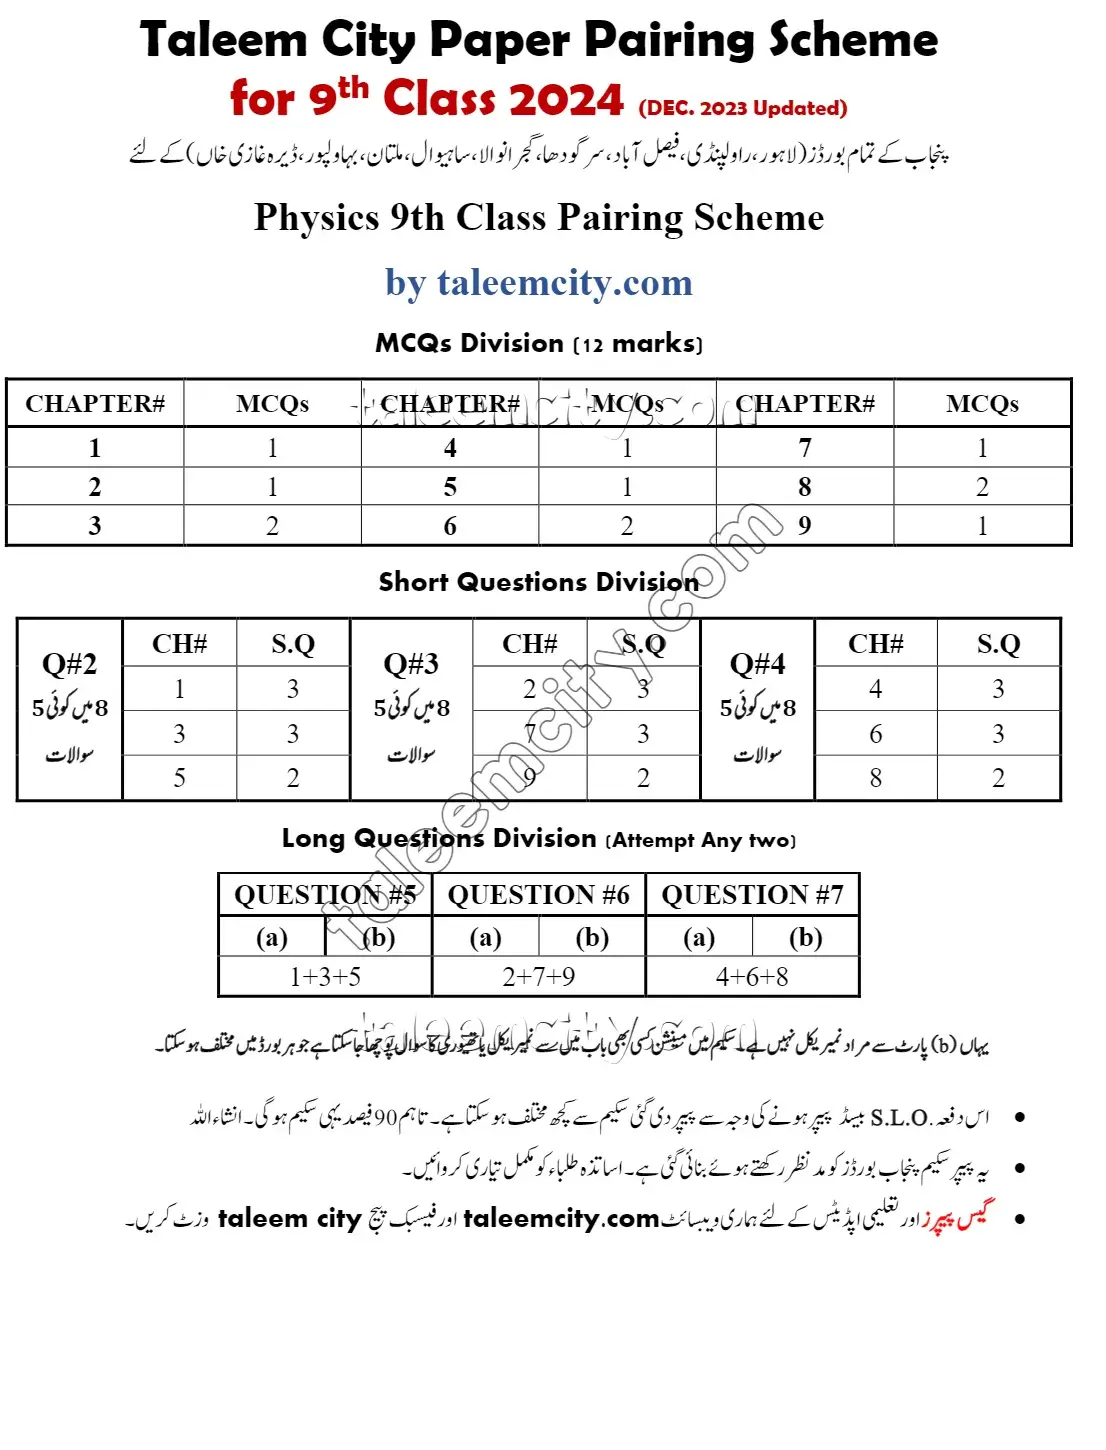 9th Class Physics Pairing Scheme 2024.webp